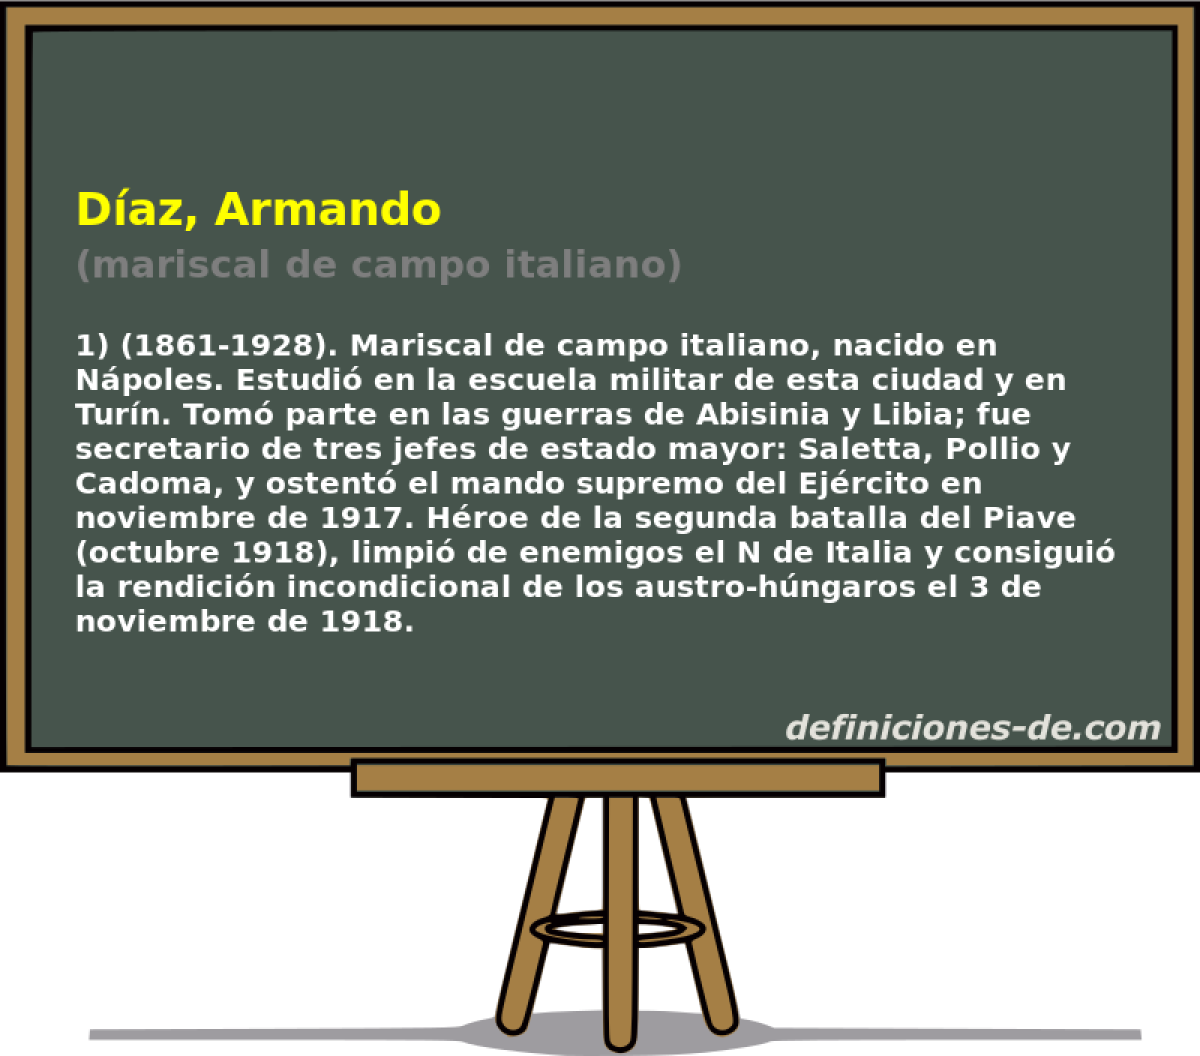 Daz, Armando (mariscal de campo italiano)